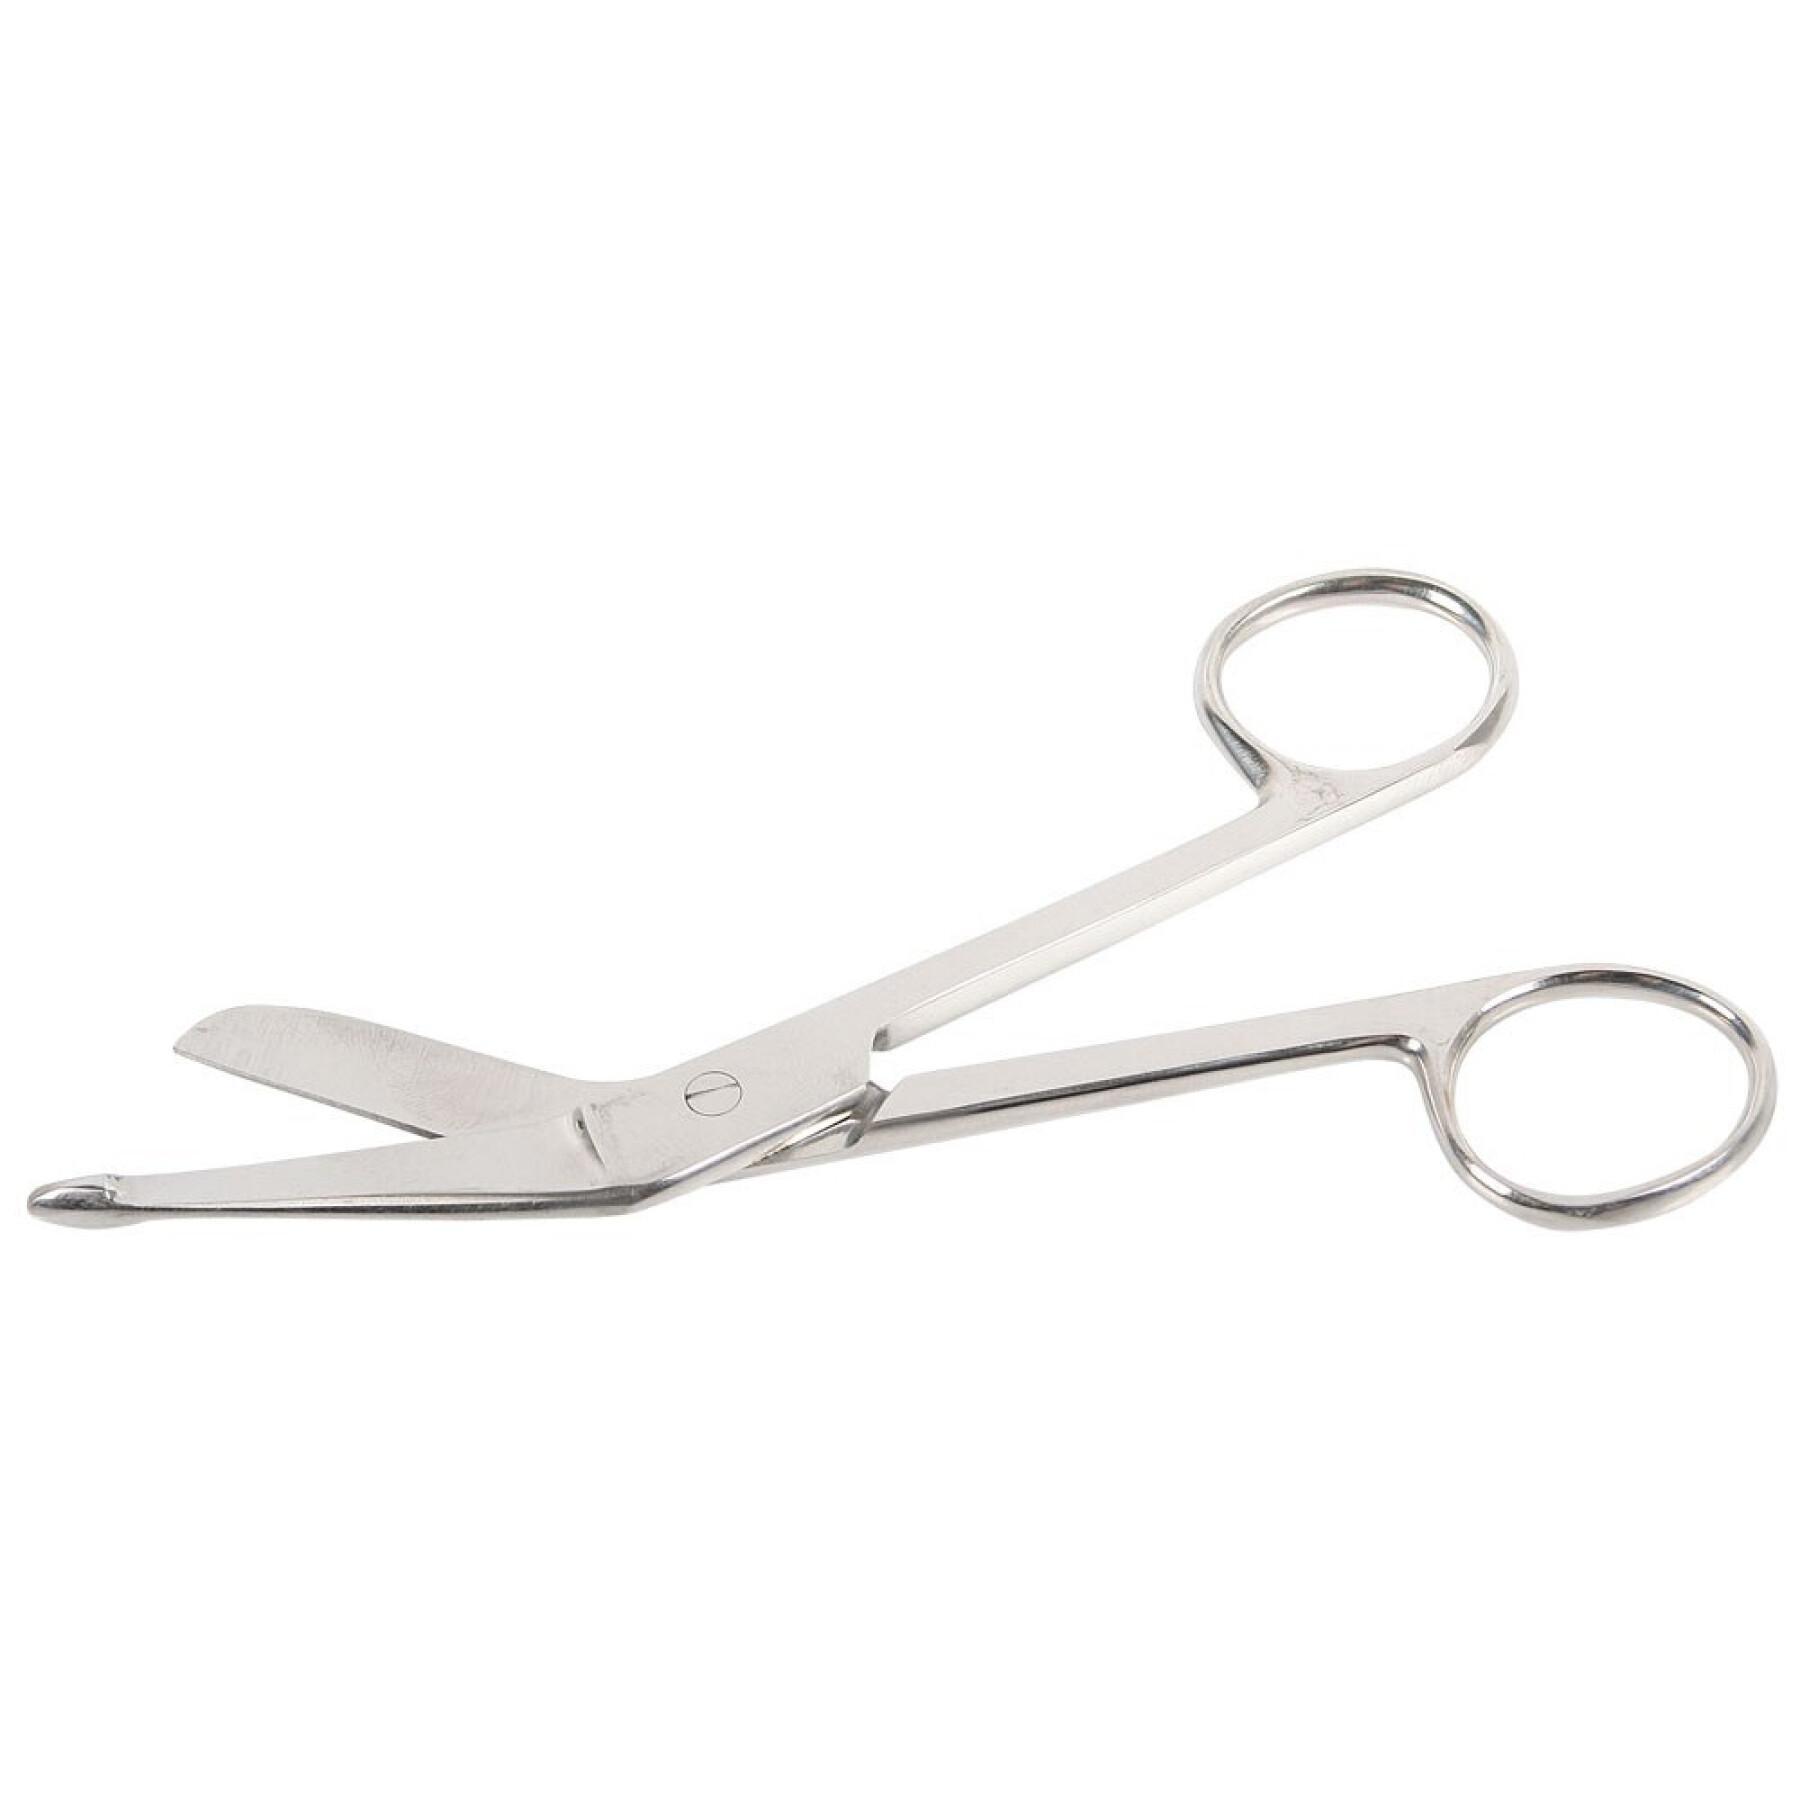 Stainless steel bandage scissors Harry's Horse RVS 5